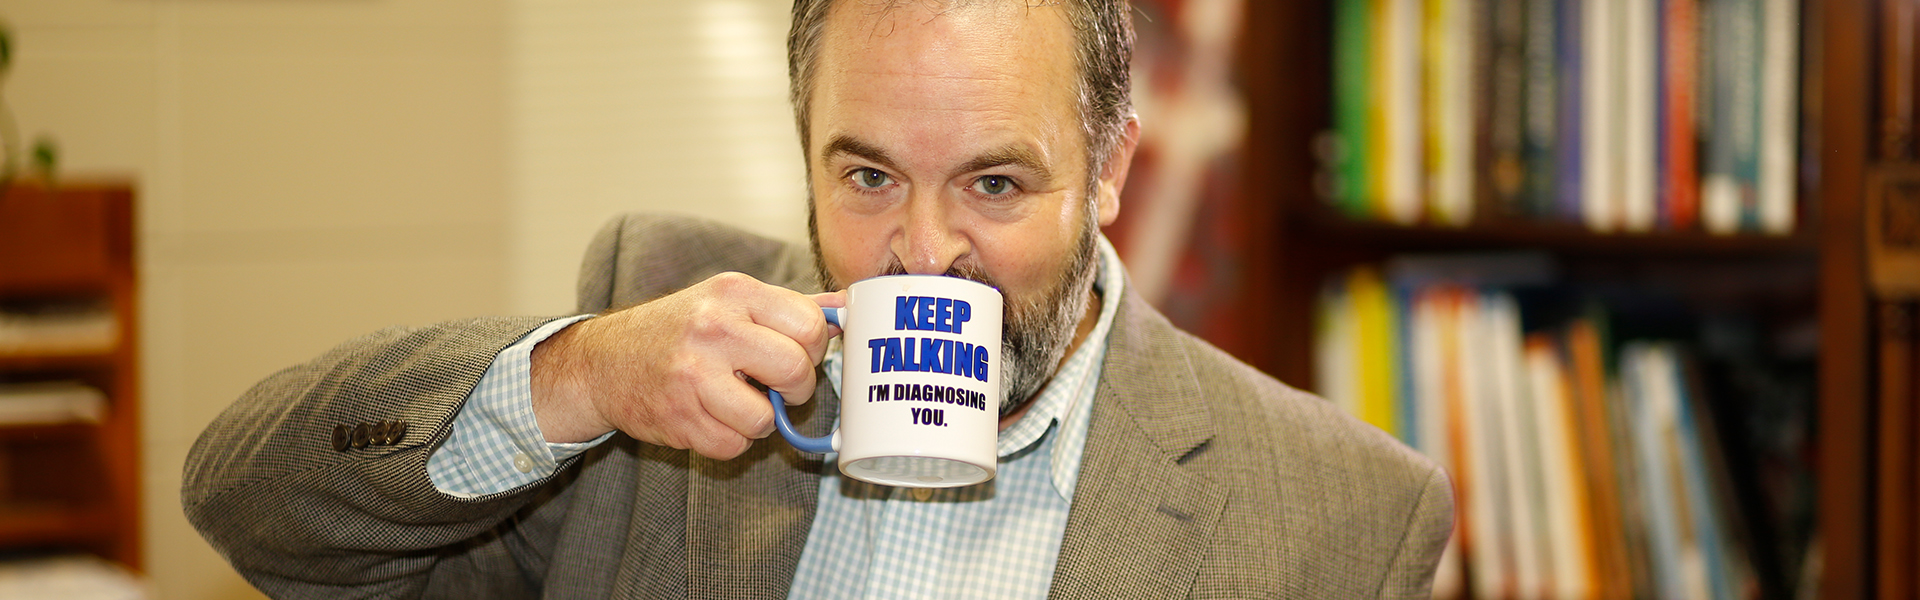 Faulkner Faculty Member Drinking From Mug